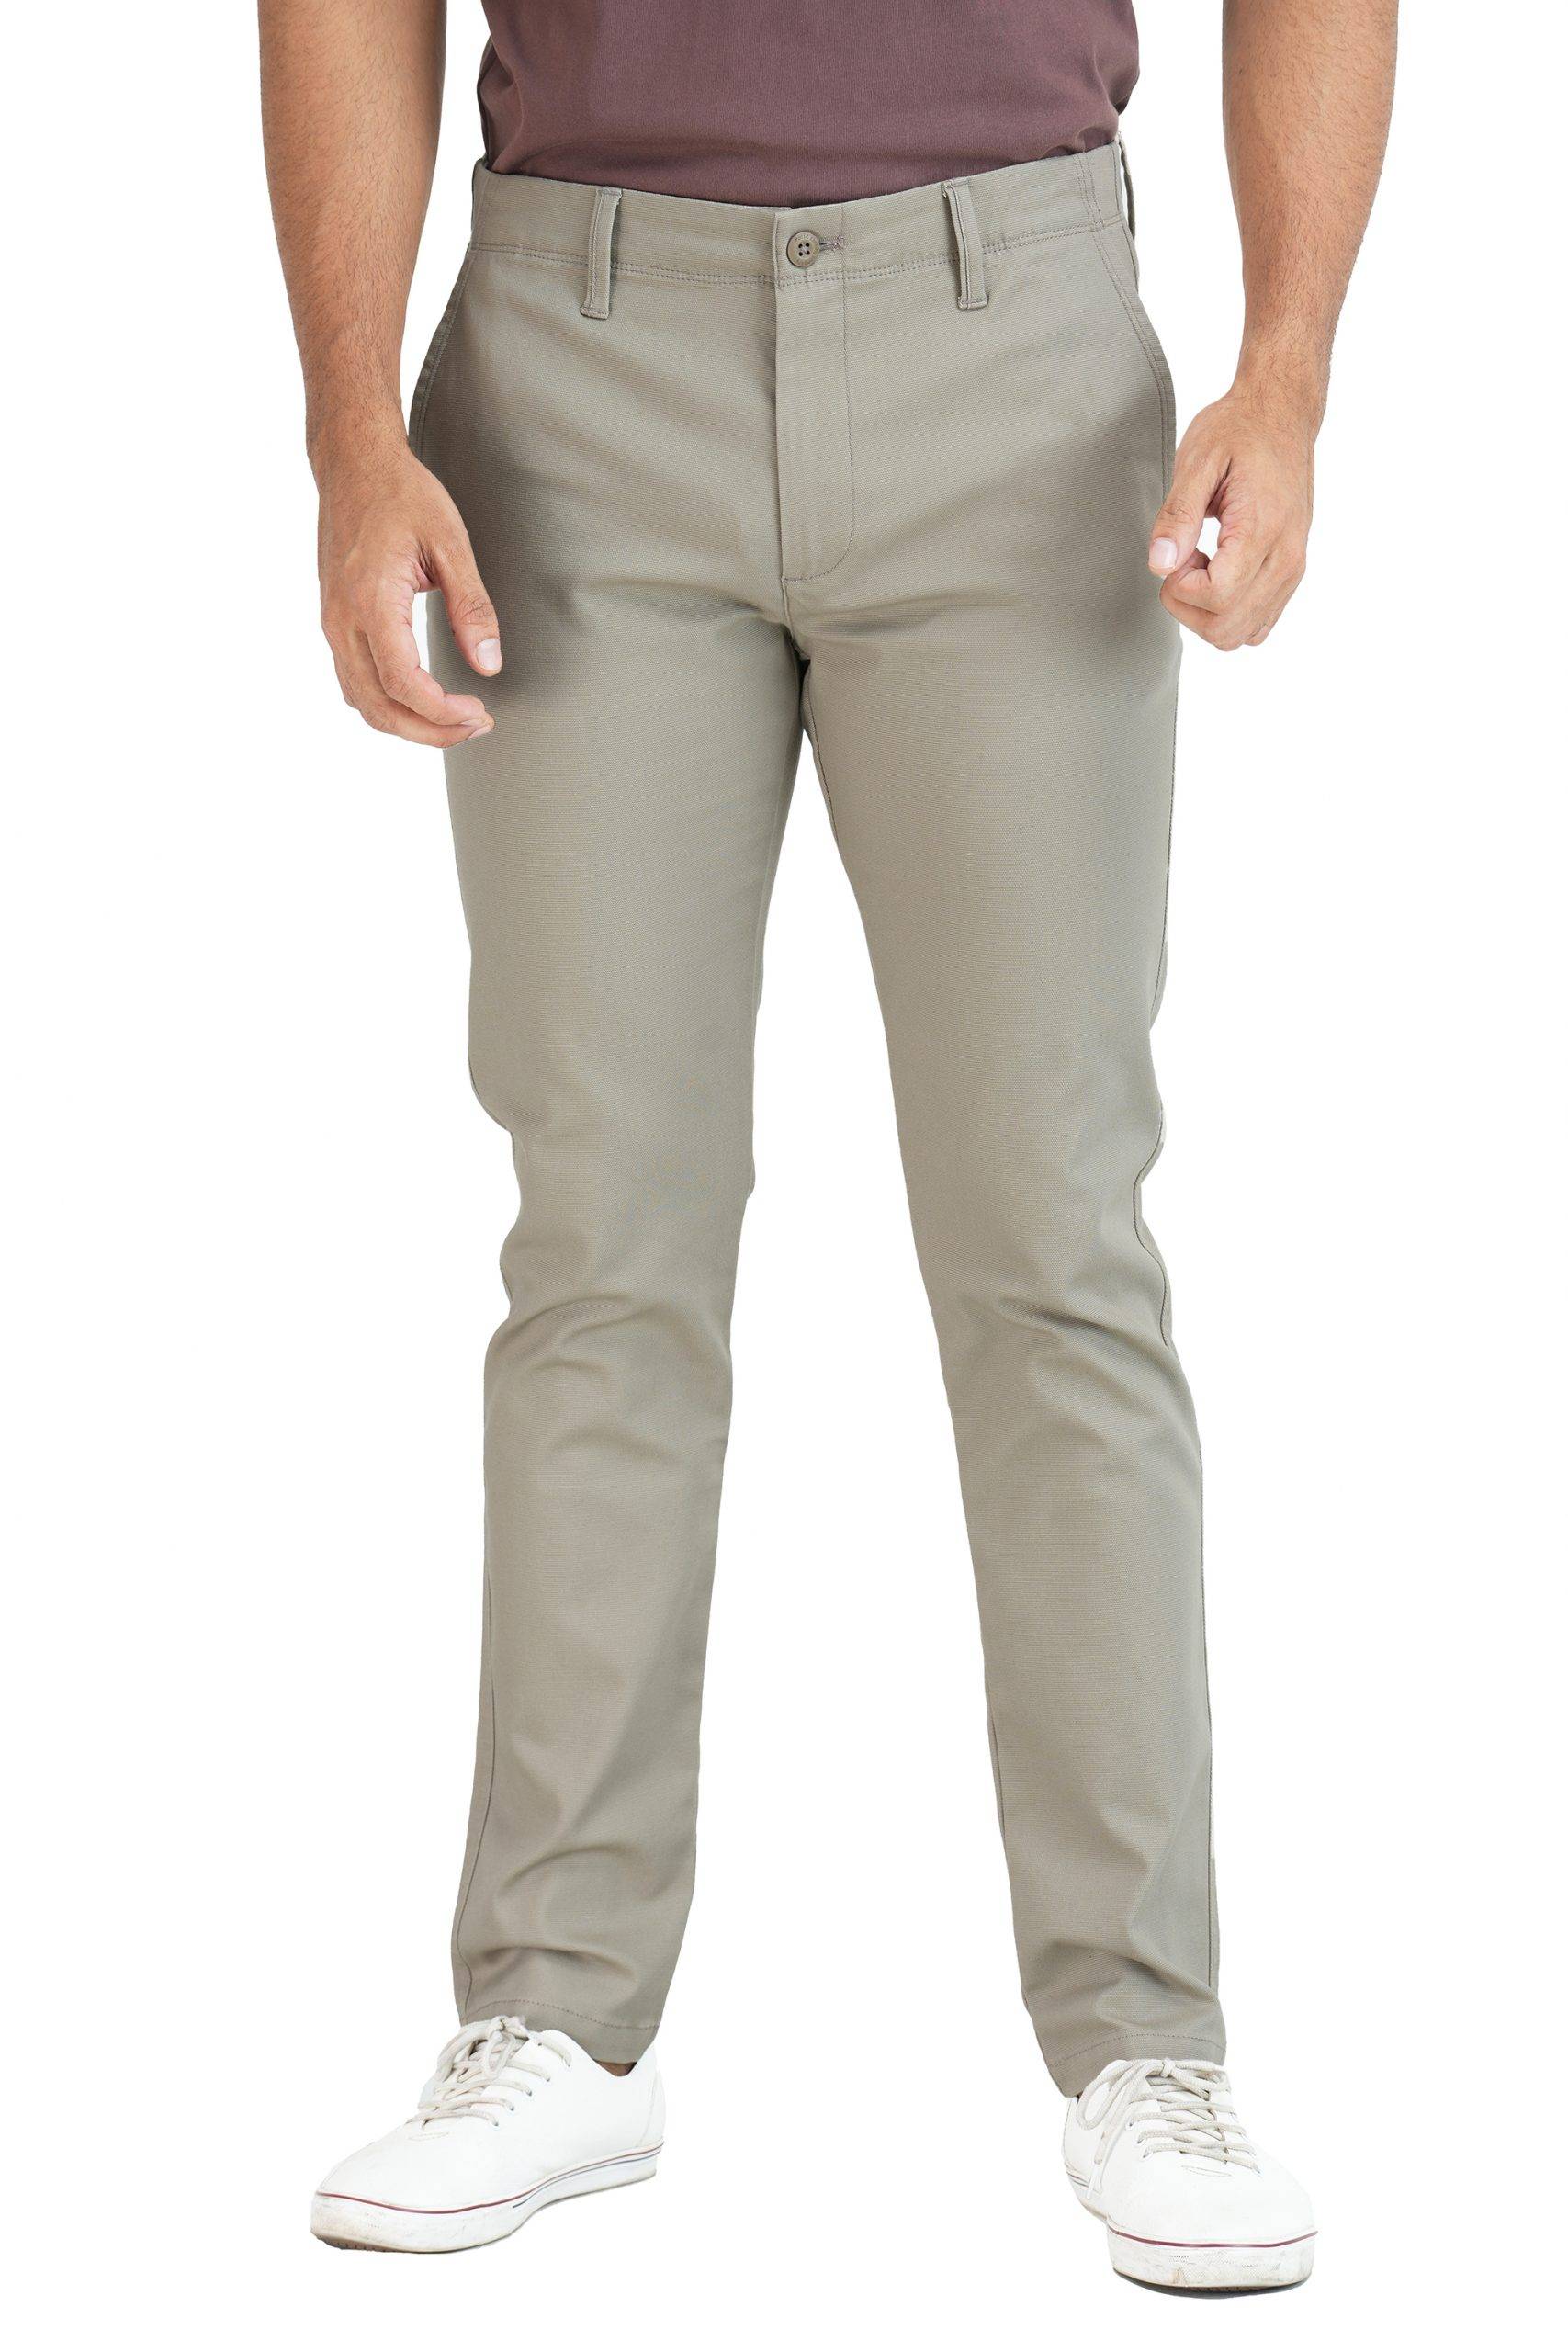 Premium Cotton Casual Chino Pant- Light Sand – Moose Clothing Company